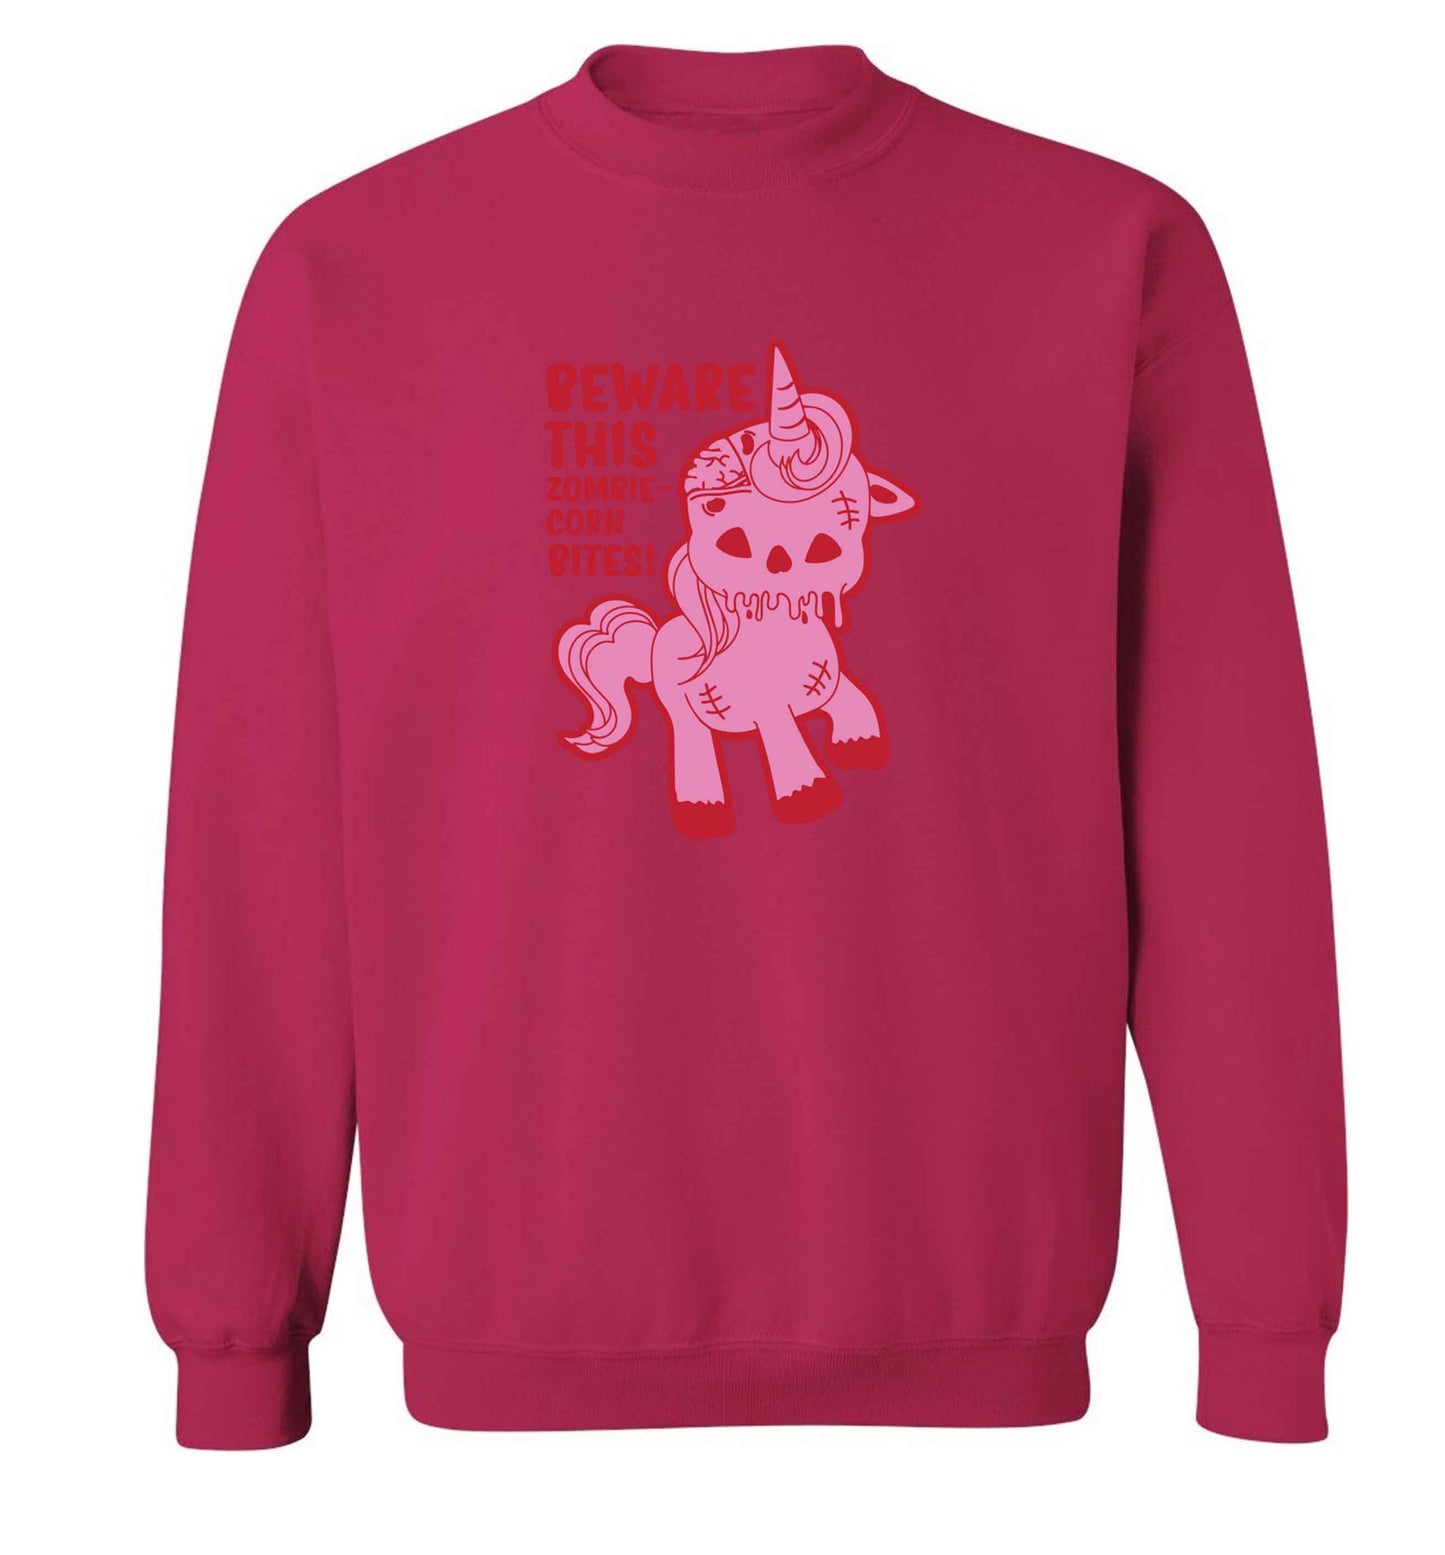 Beware this zombiecorn bites adult's unisex pink sweater 2XL